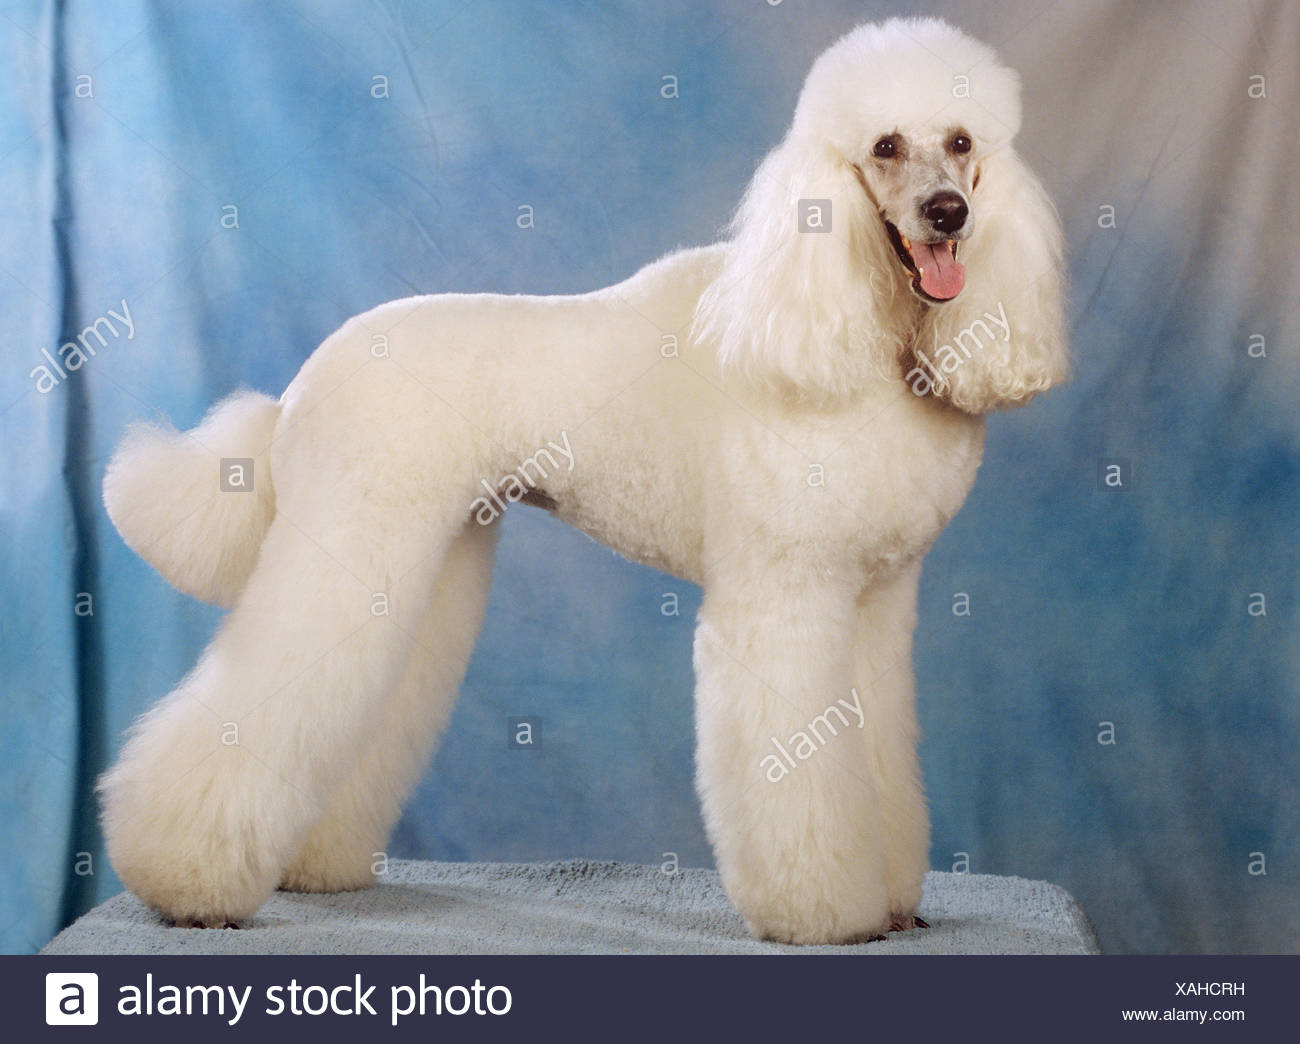 white giant dog